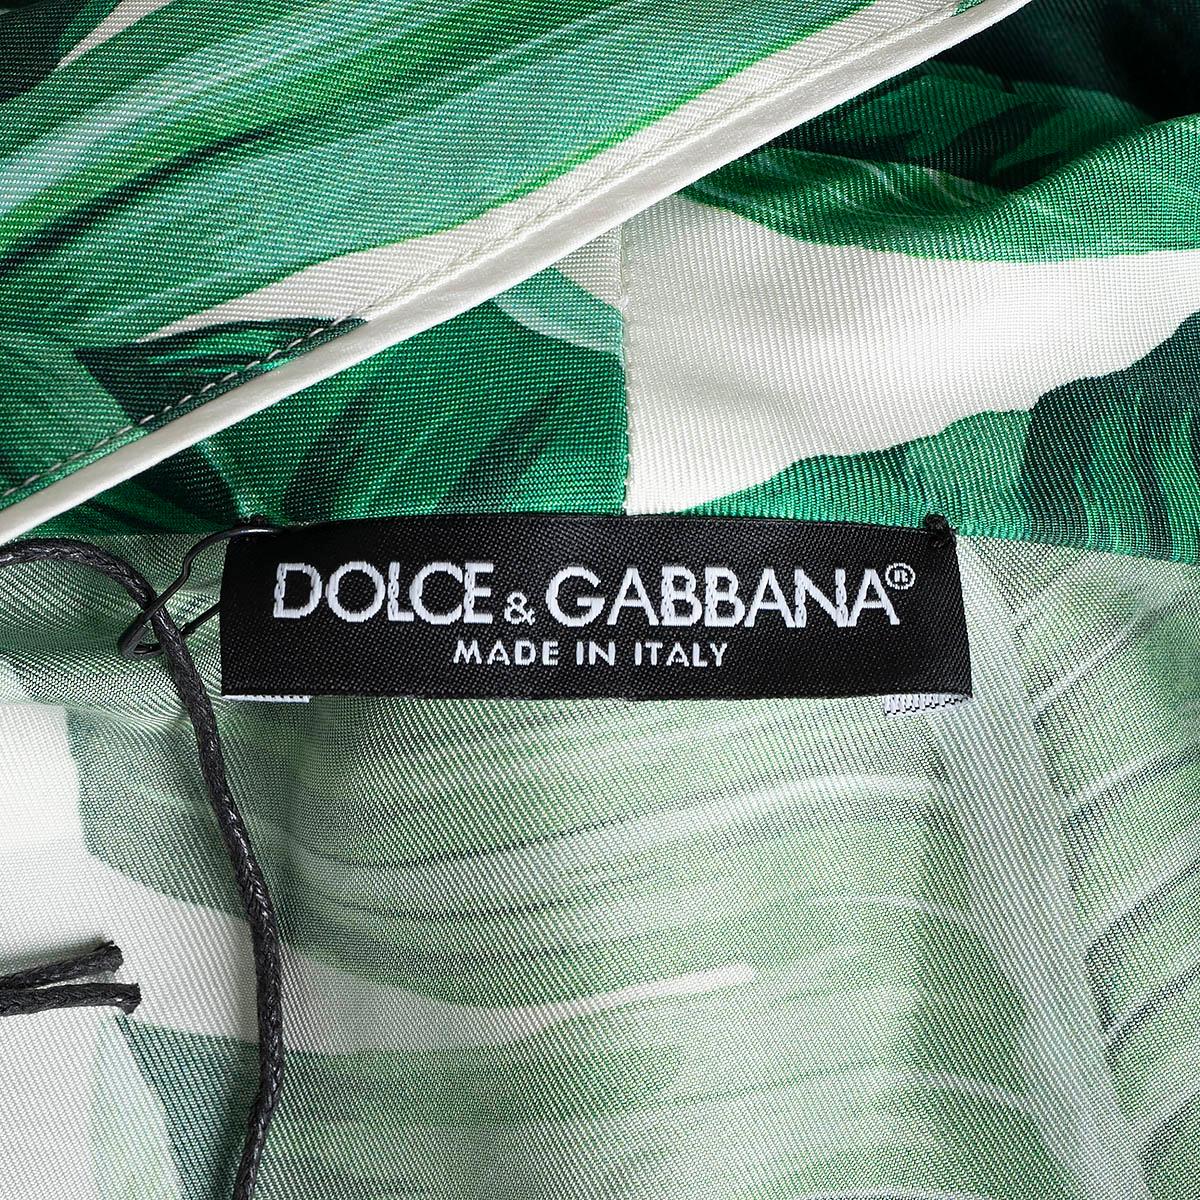 DOLCE & GABBANA Veste ceinturée BANANA LEAF 2016 en soie verte et blanche en vente 2